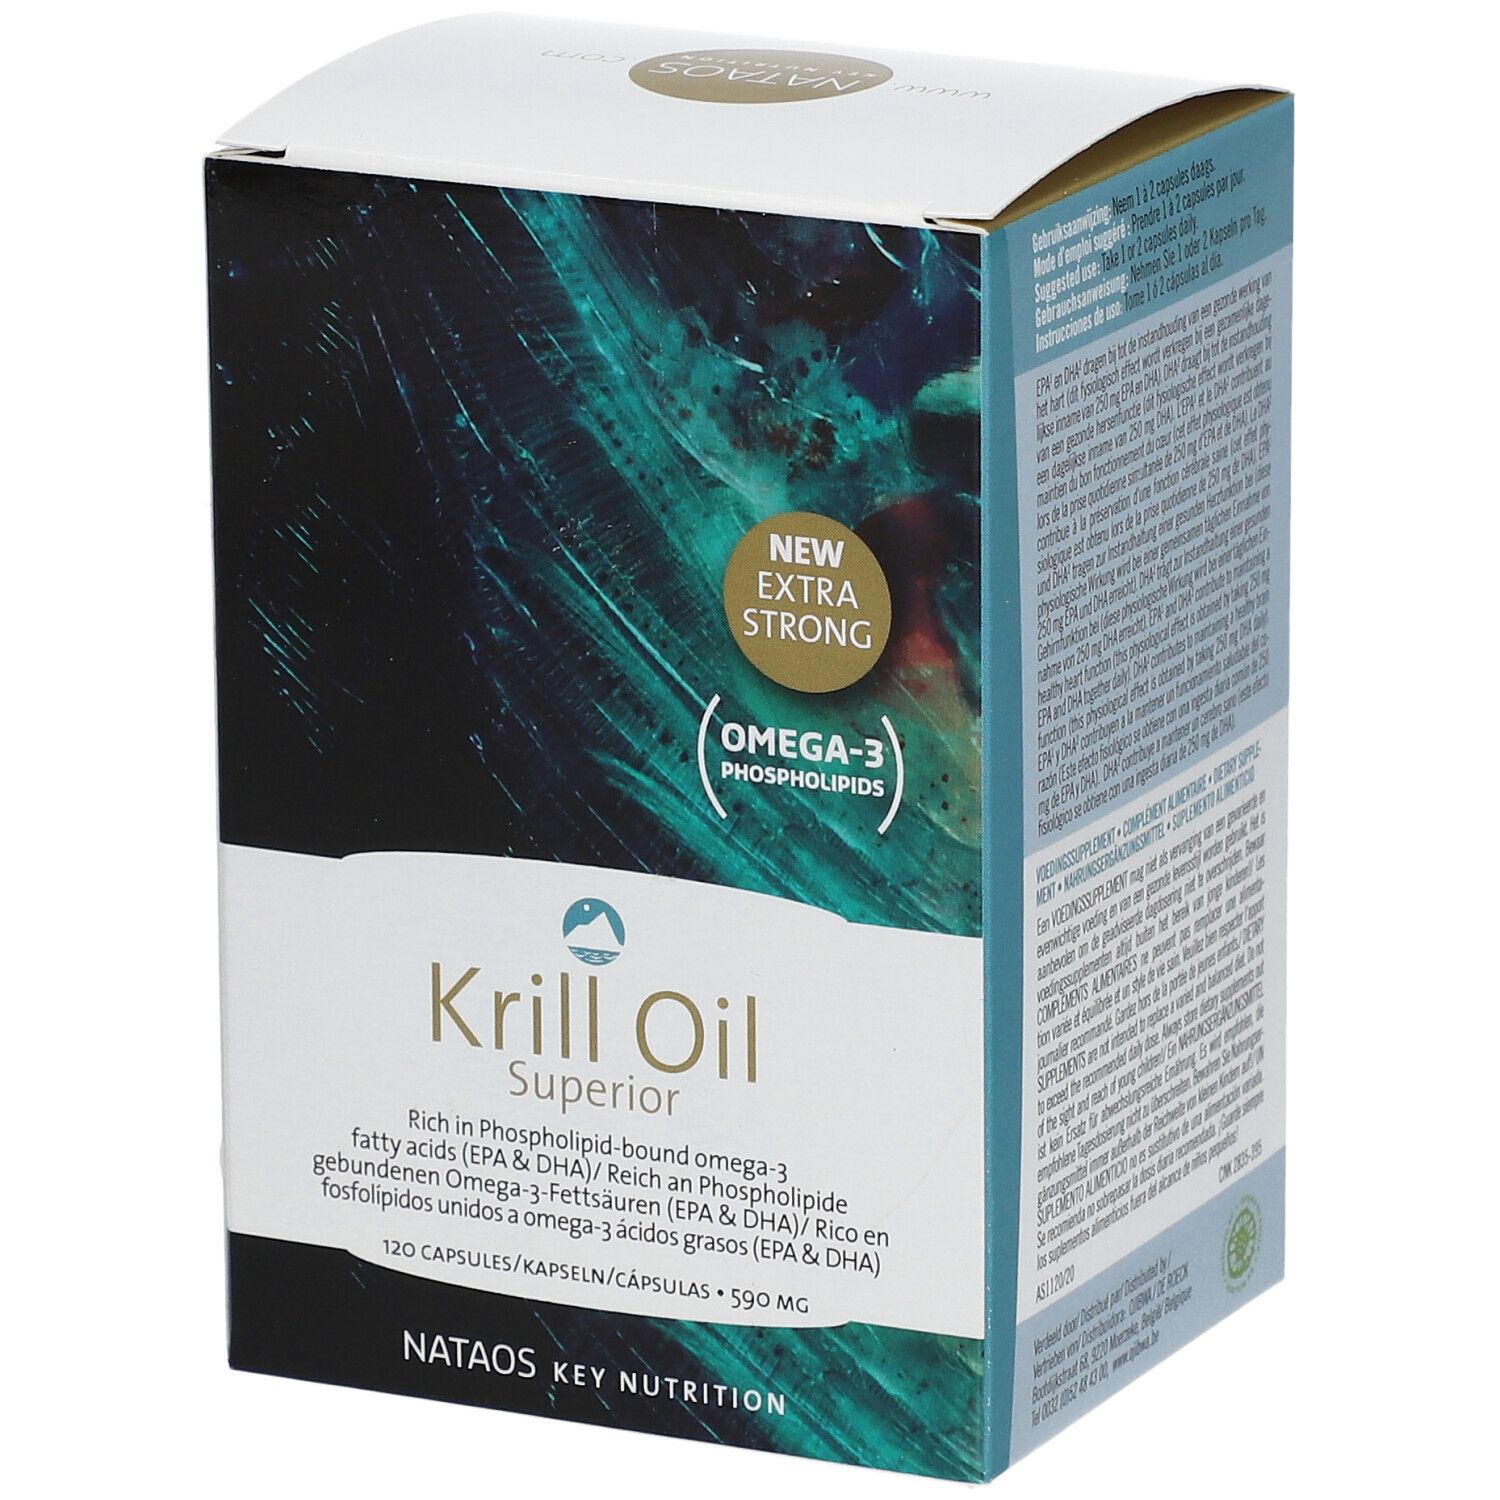 Nataos Key Nutrition Krill Oil Superior 500mg